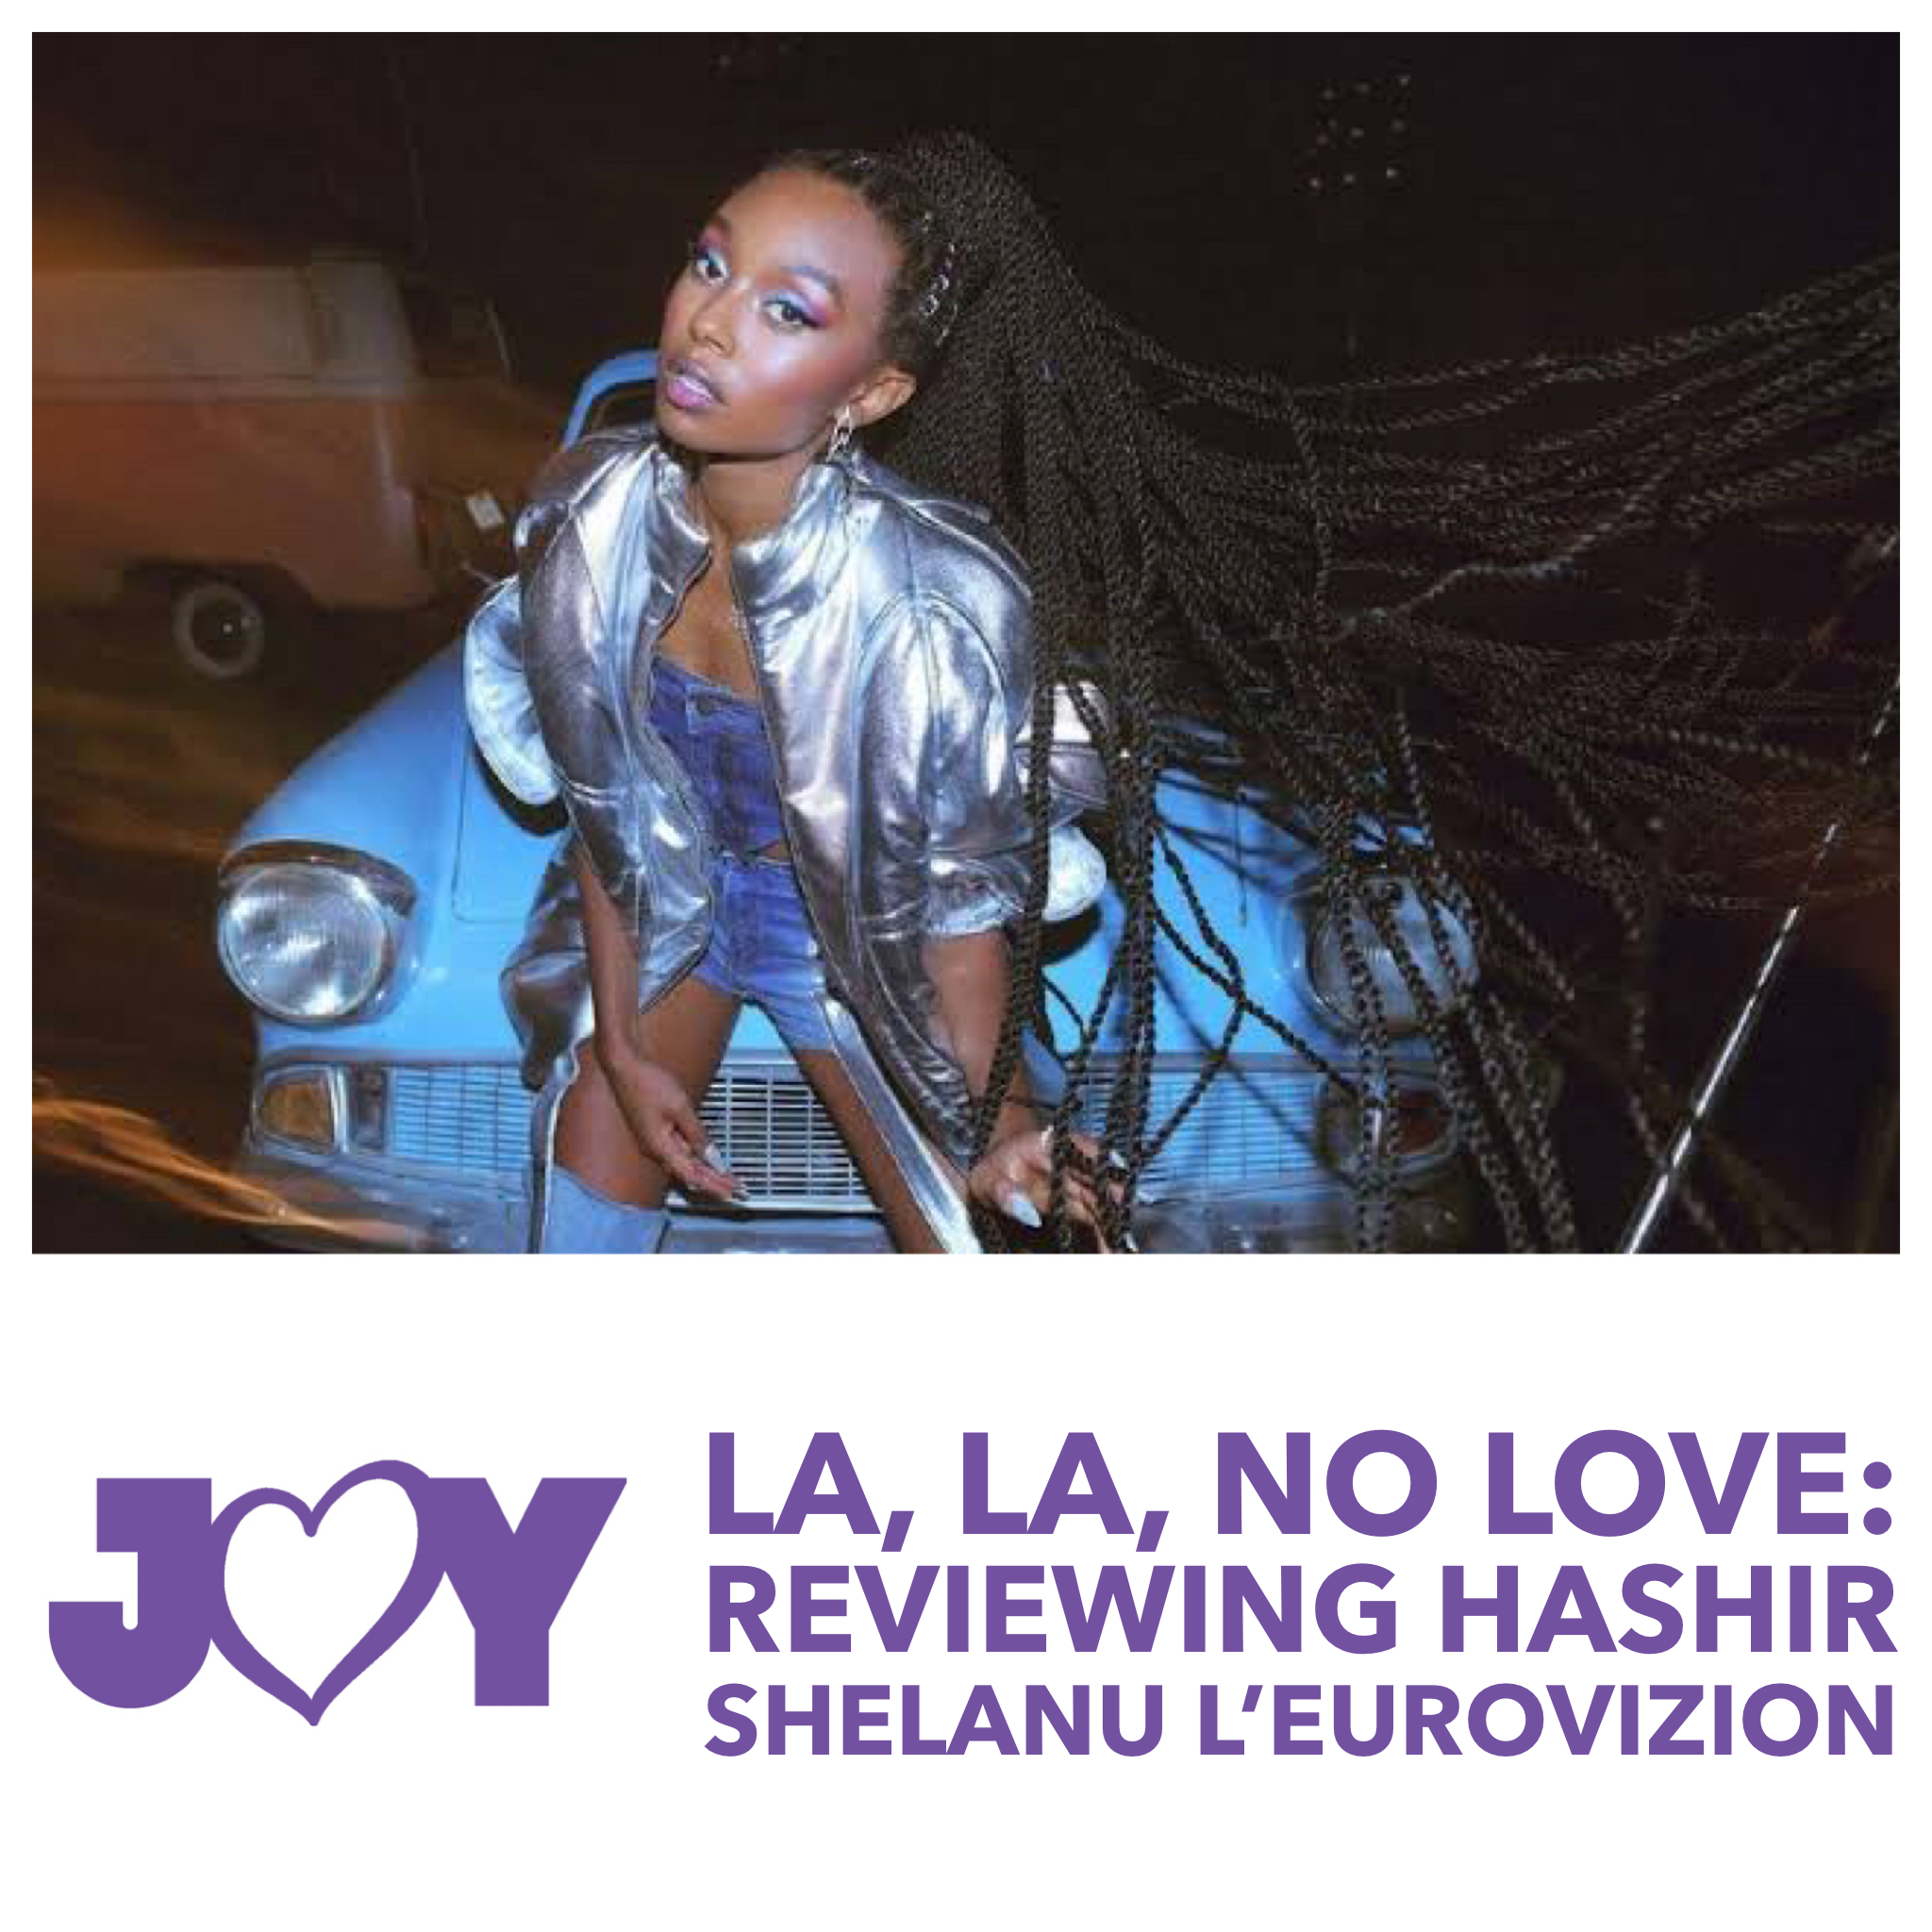 🇮🇱 Israel says ‘La la, no love’: Reviewing HaShir Shelanu L’Eurovizion